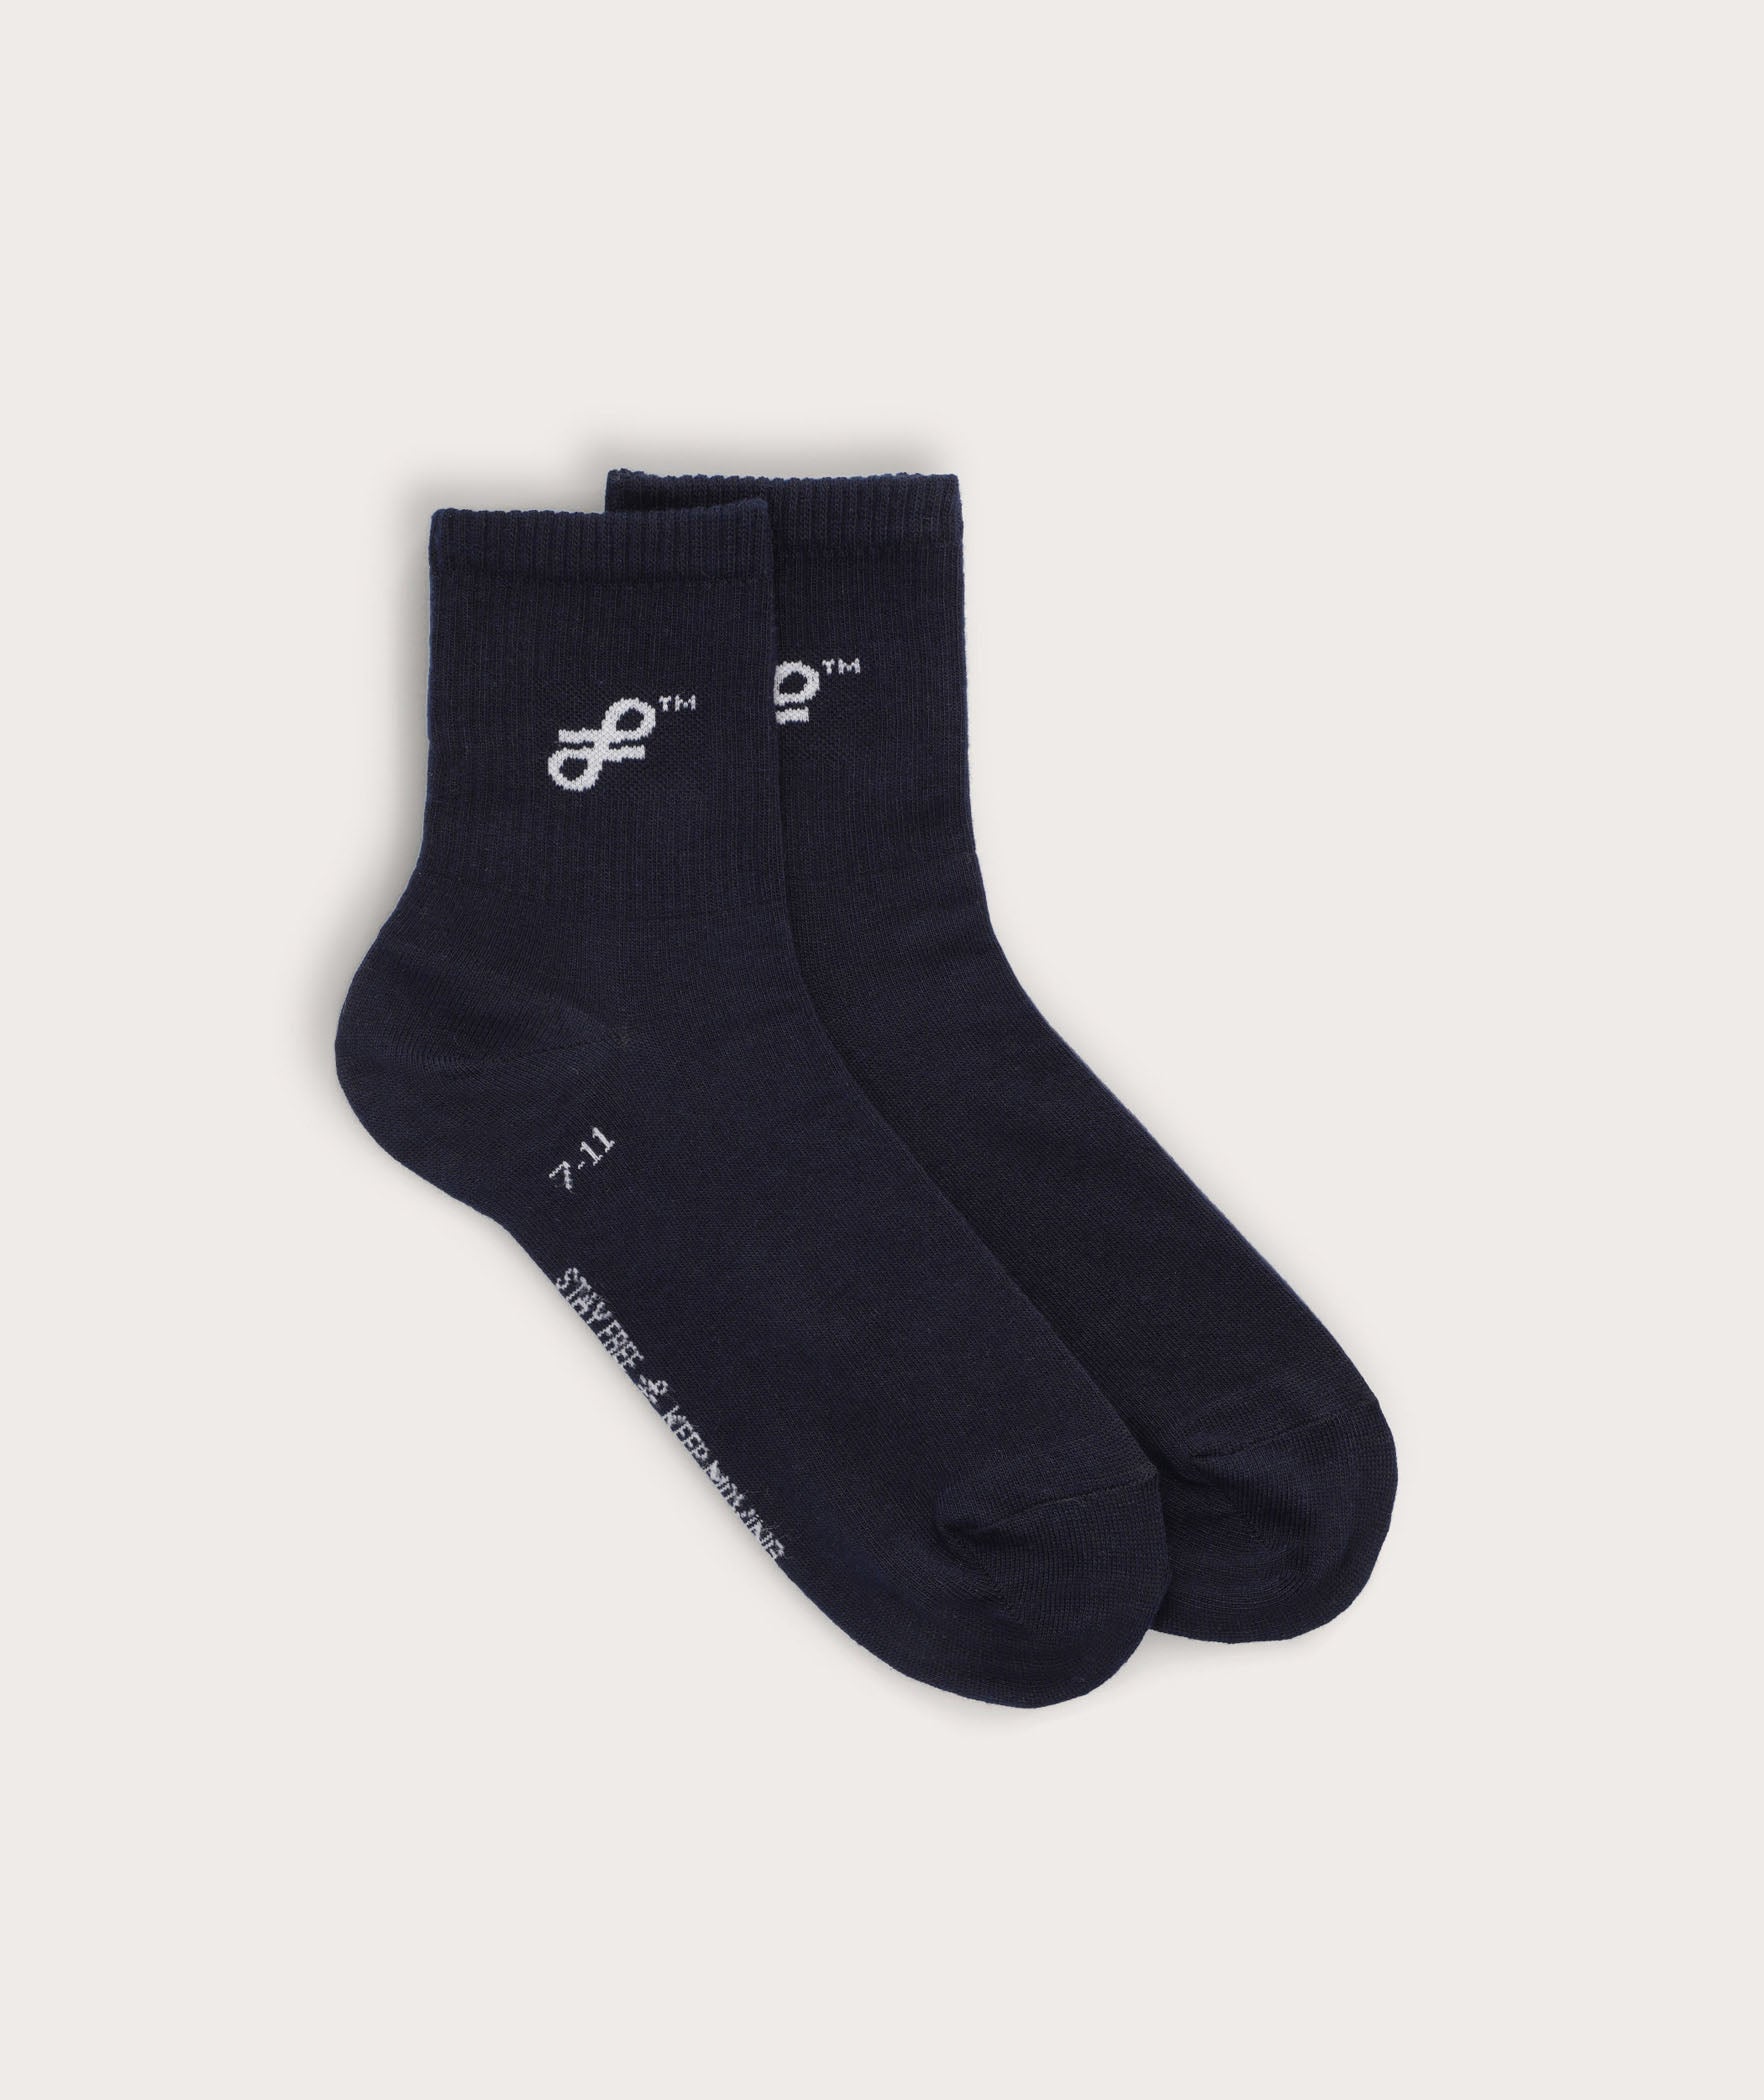 Socks FOM Active - Navy/ Off-White Knot (Size 7-11)